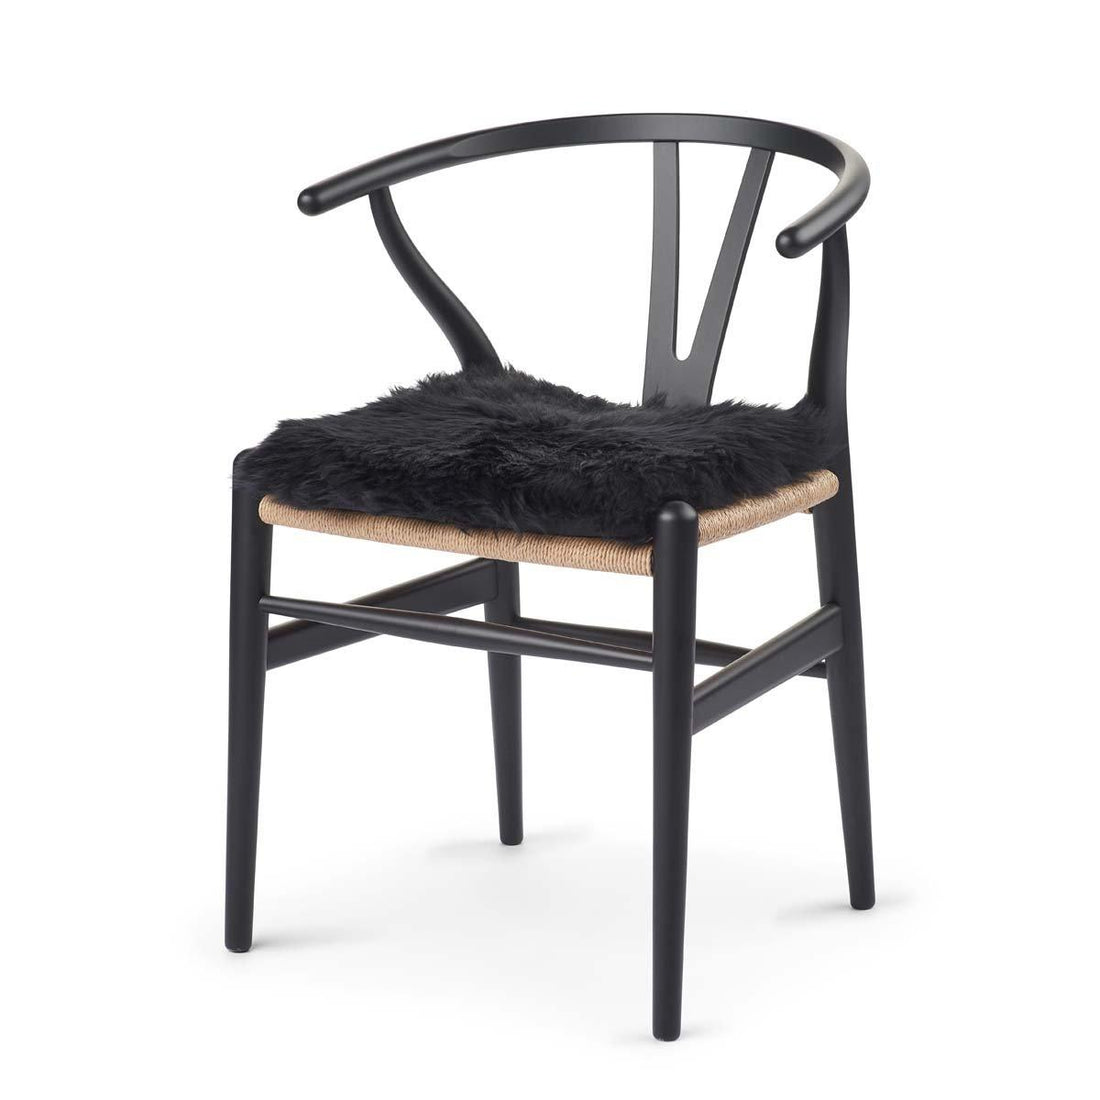 Seat cushion | Lambskin | Long -haired | New Zealand | 37x37 cm.